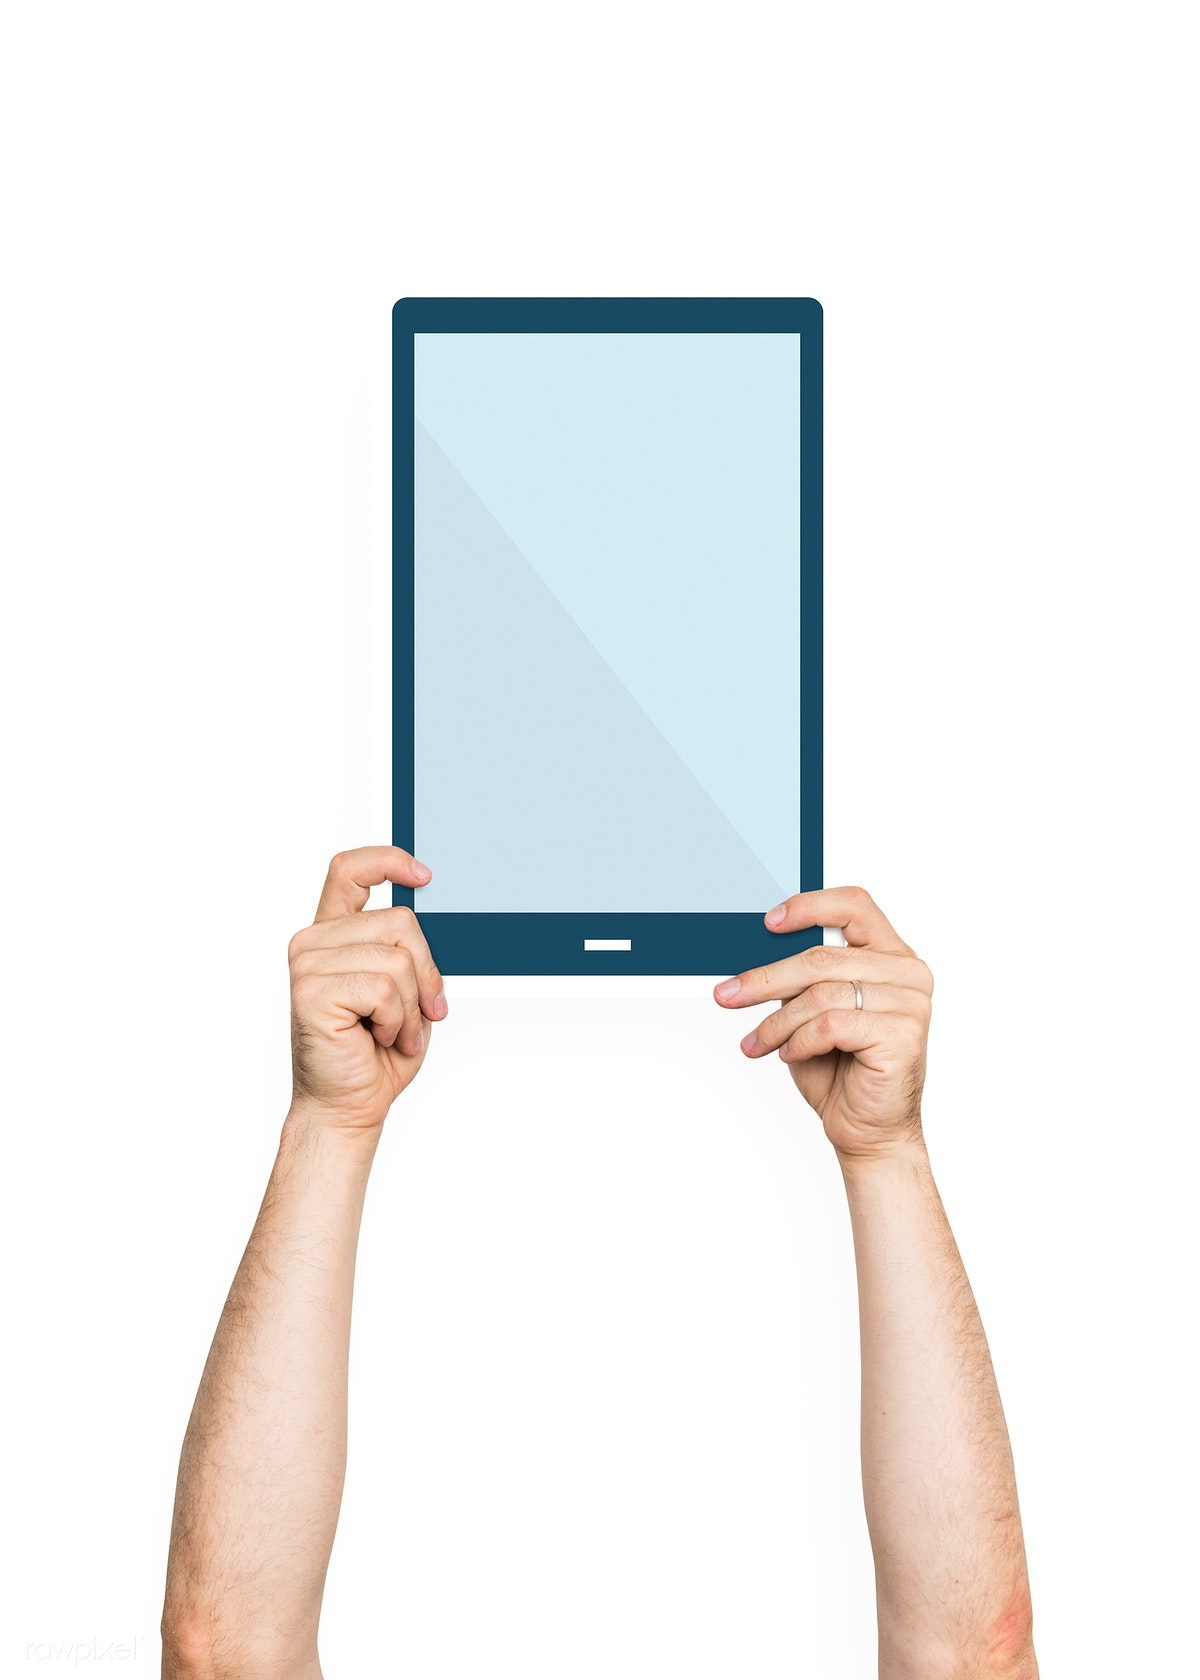 Download premium image of Hand holding a digital tablet